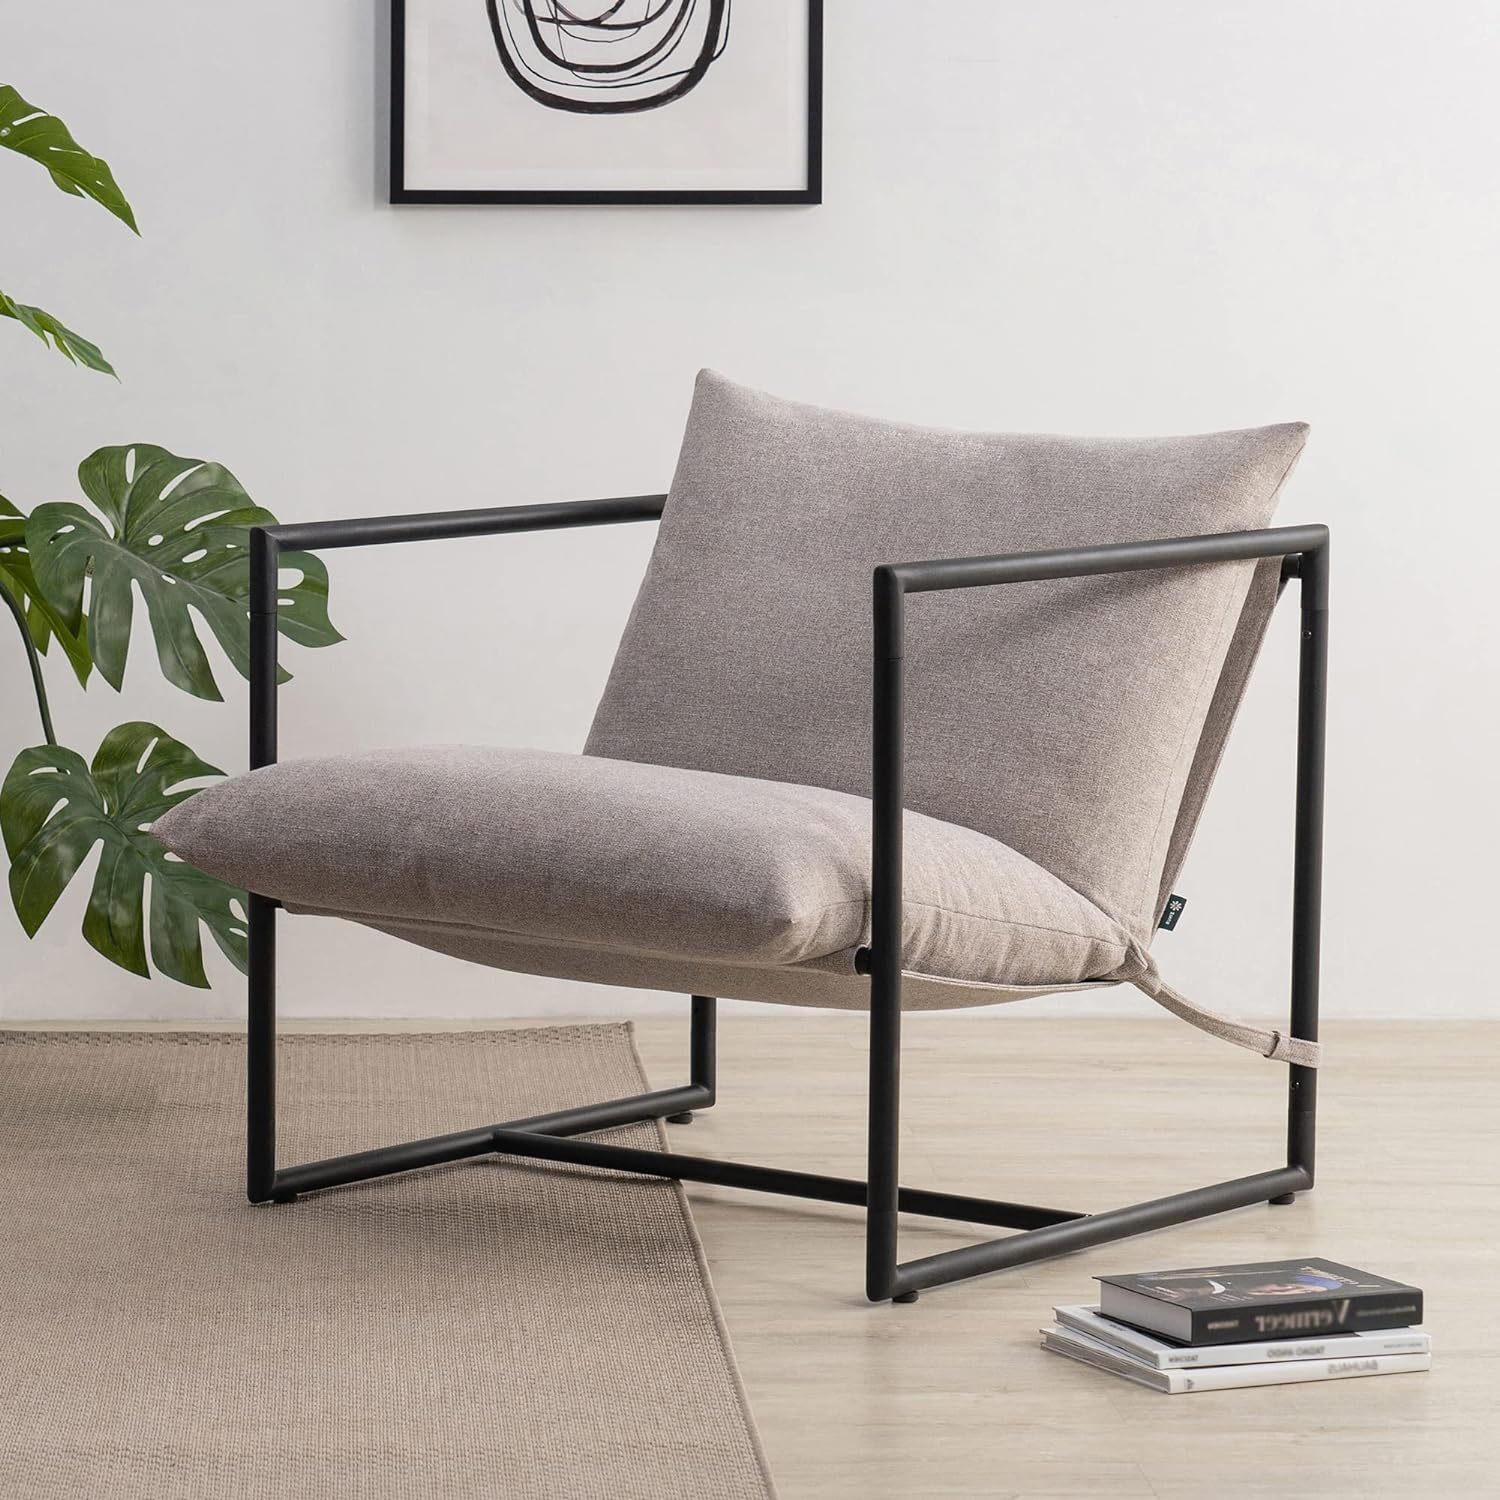 Zinus Aidan Sling Accent Chair / Metal Framed Armchair, Oatmeal, With Shredded - $133.95